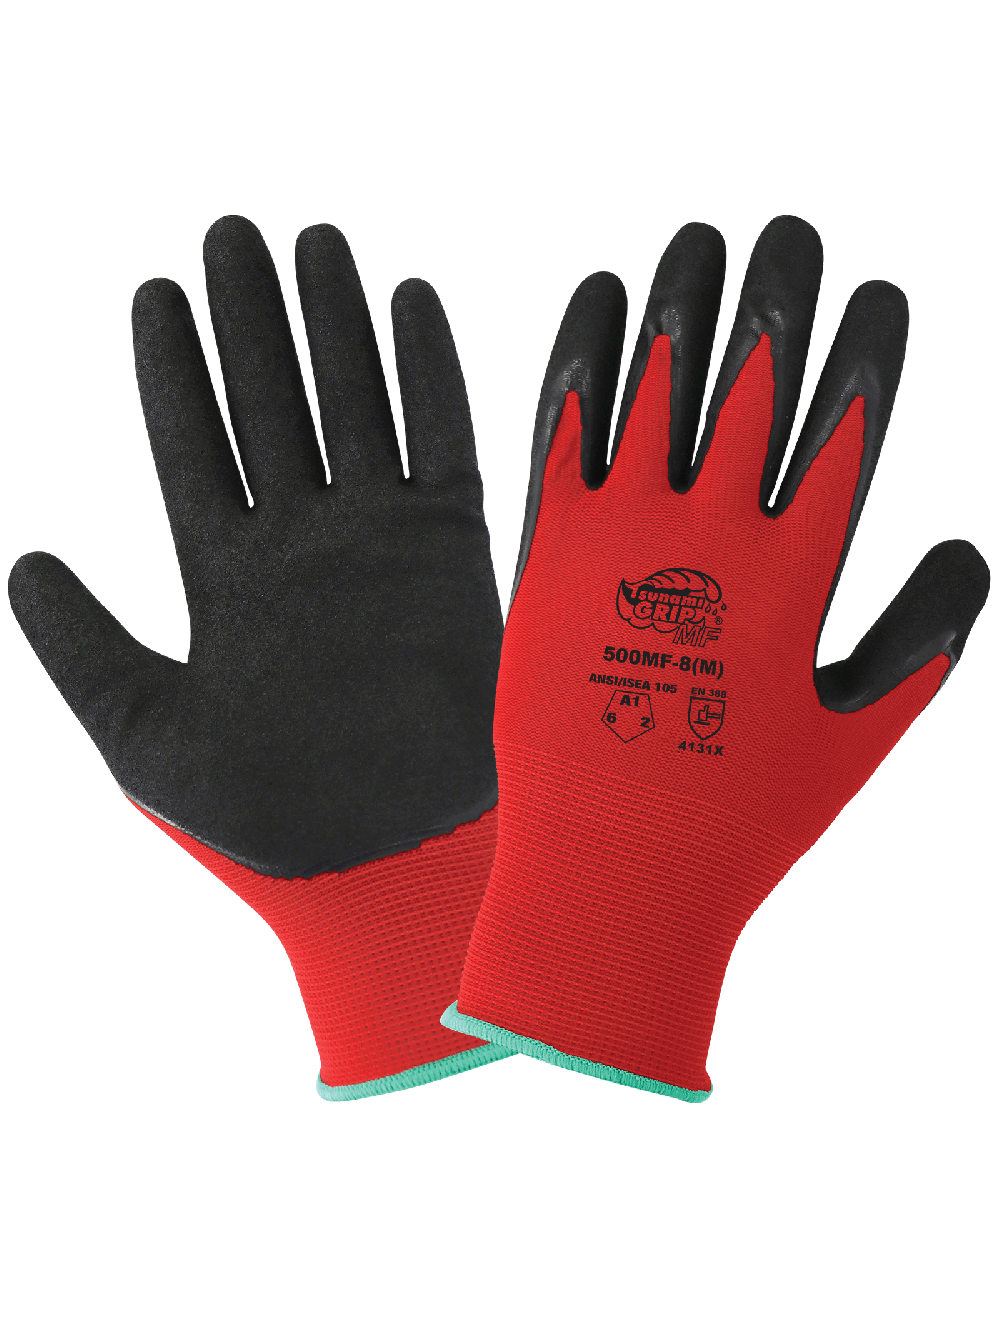 Work Gloves: X-Large, Nitrile-Coated Nylon, General Purpose